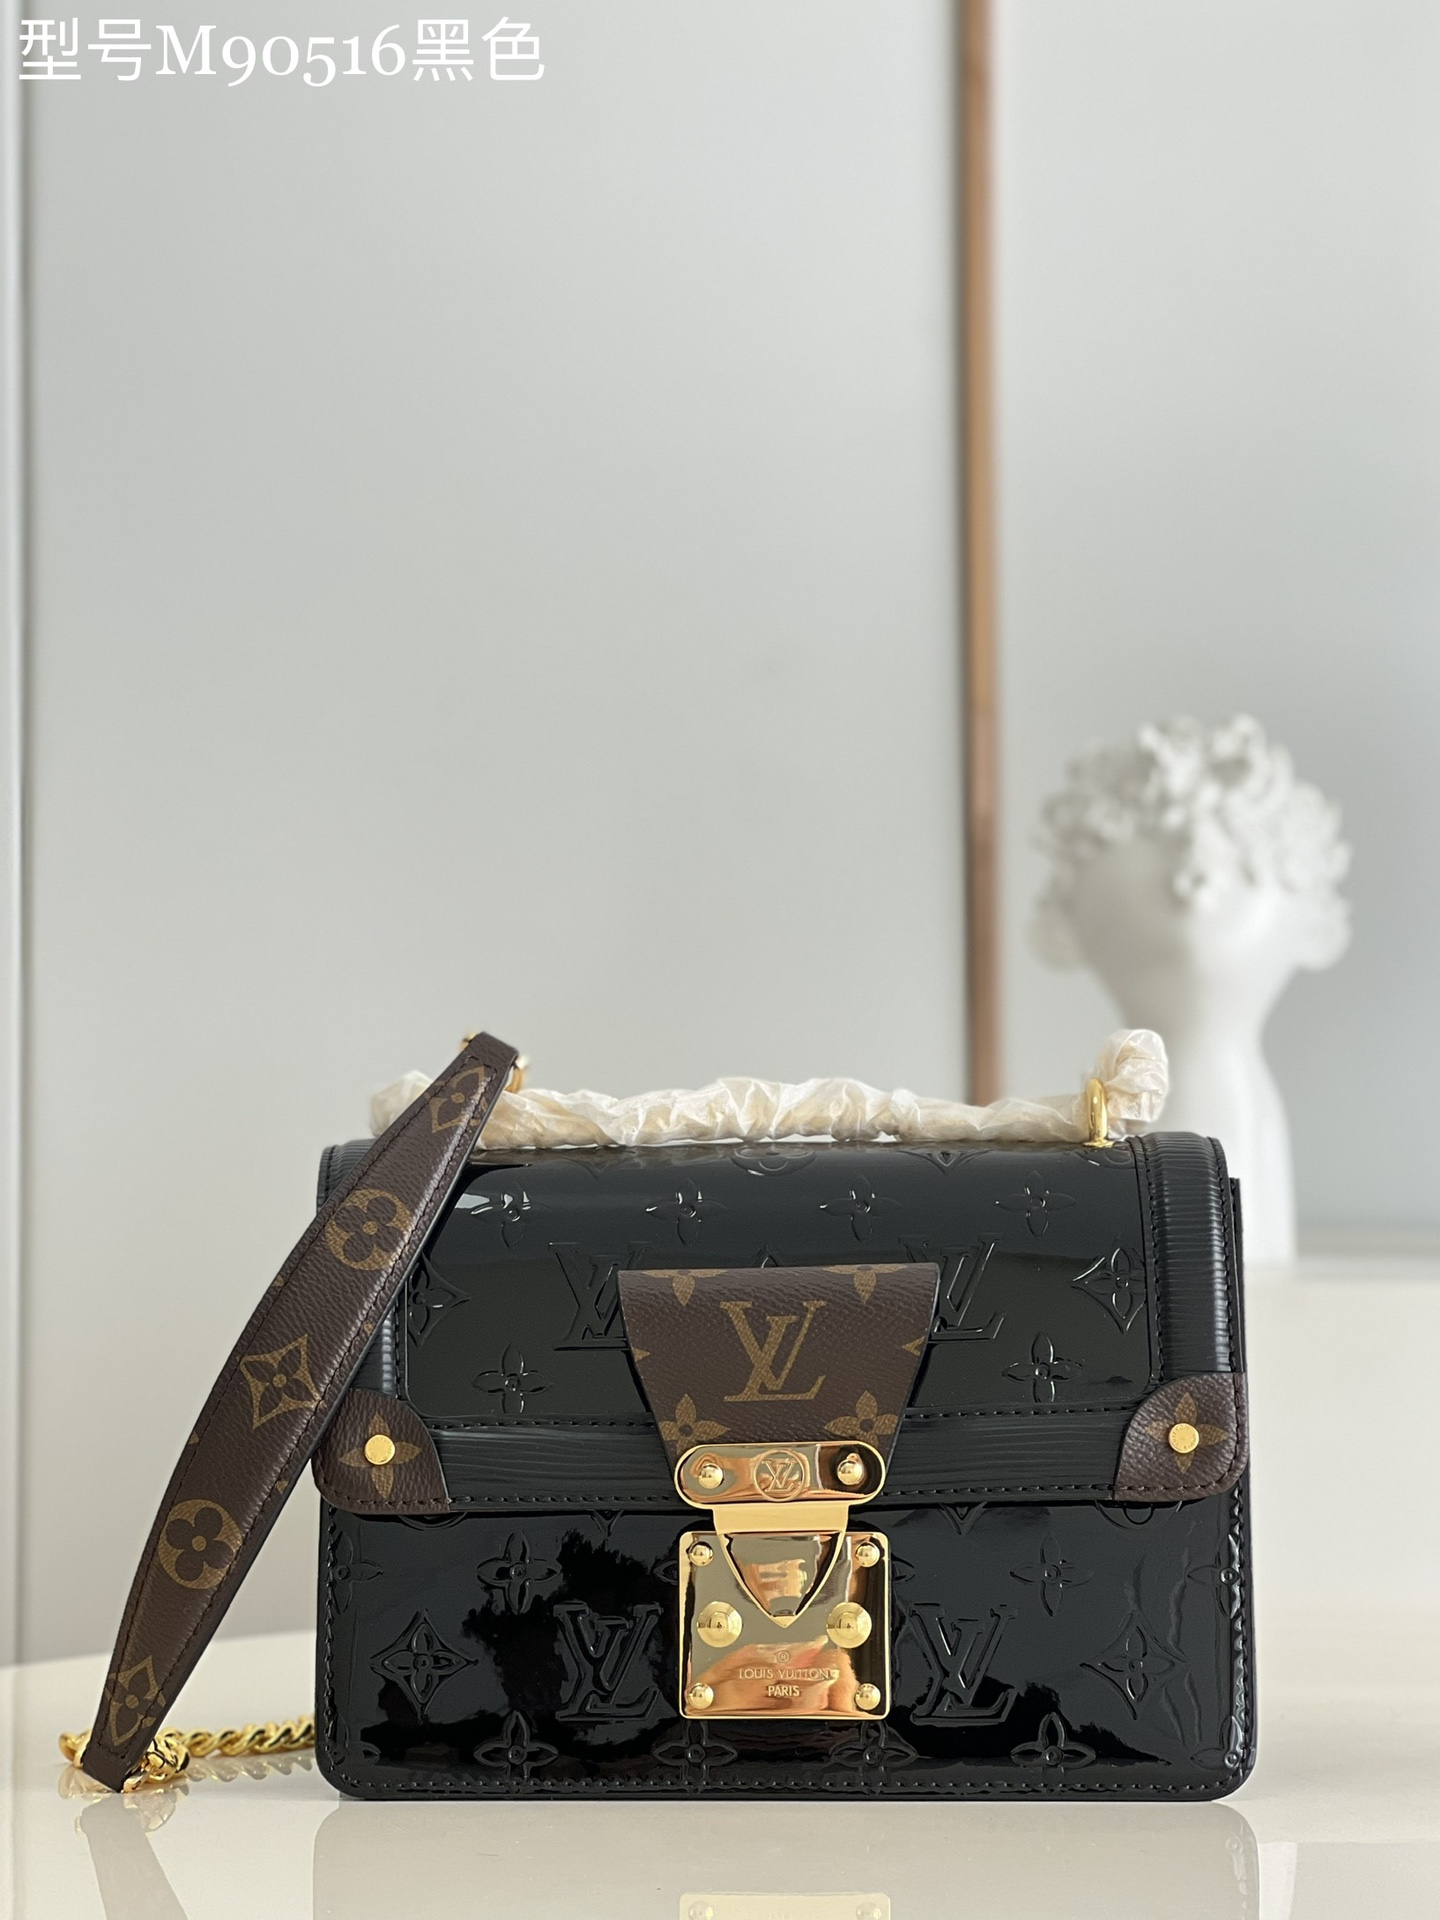 Louis Vuitton LV Wynwood Bags Handbags Black White Monogram Canvas Patent Leather Summer Collection M90516